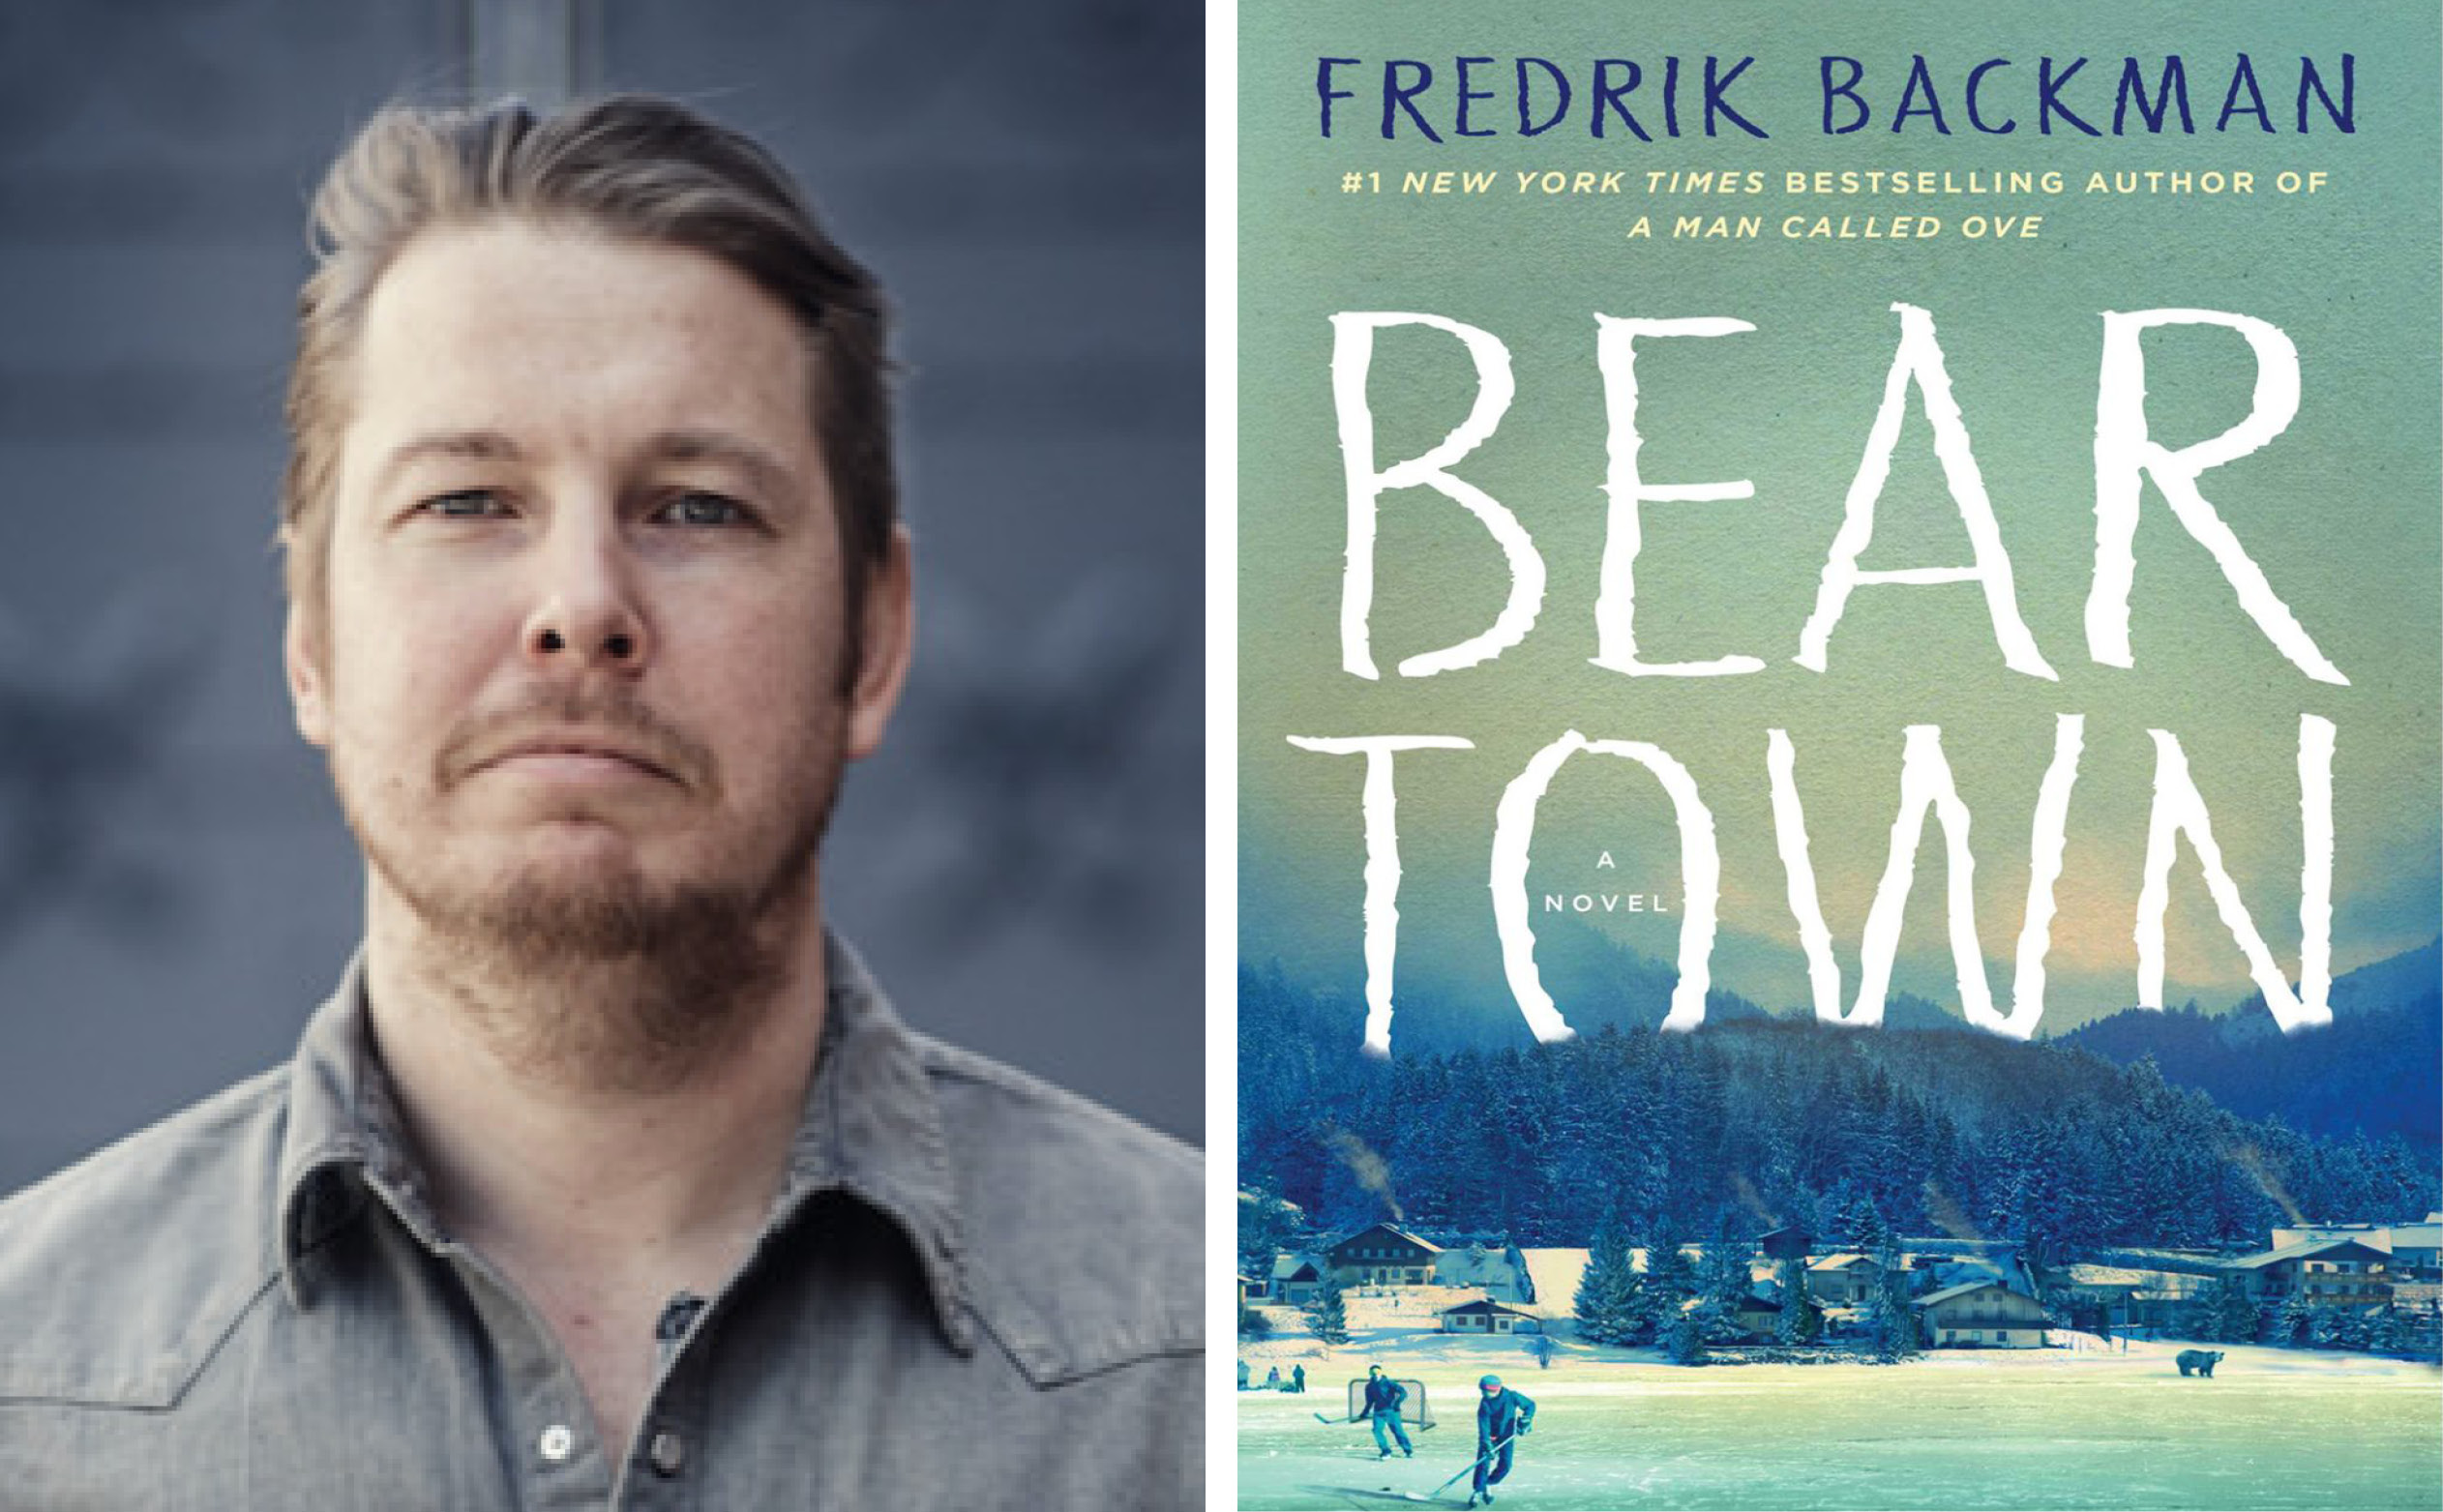 A headshot of Fredrik Backman beside a copy of his book Bear Town